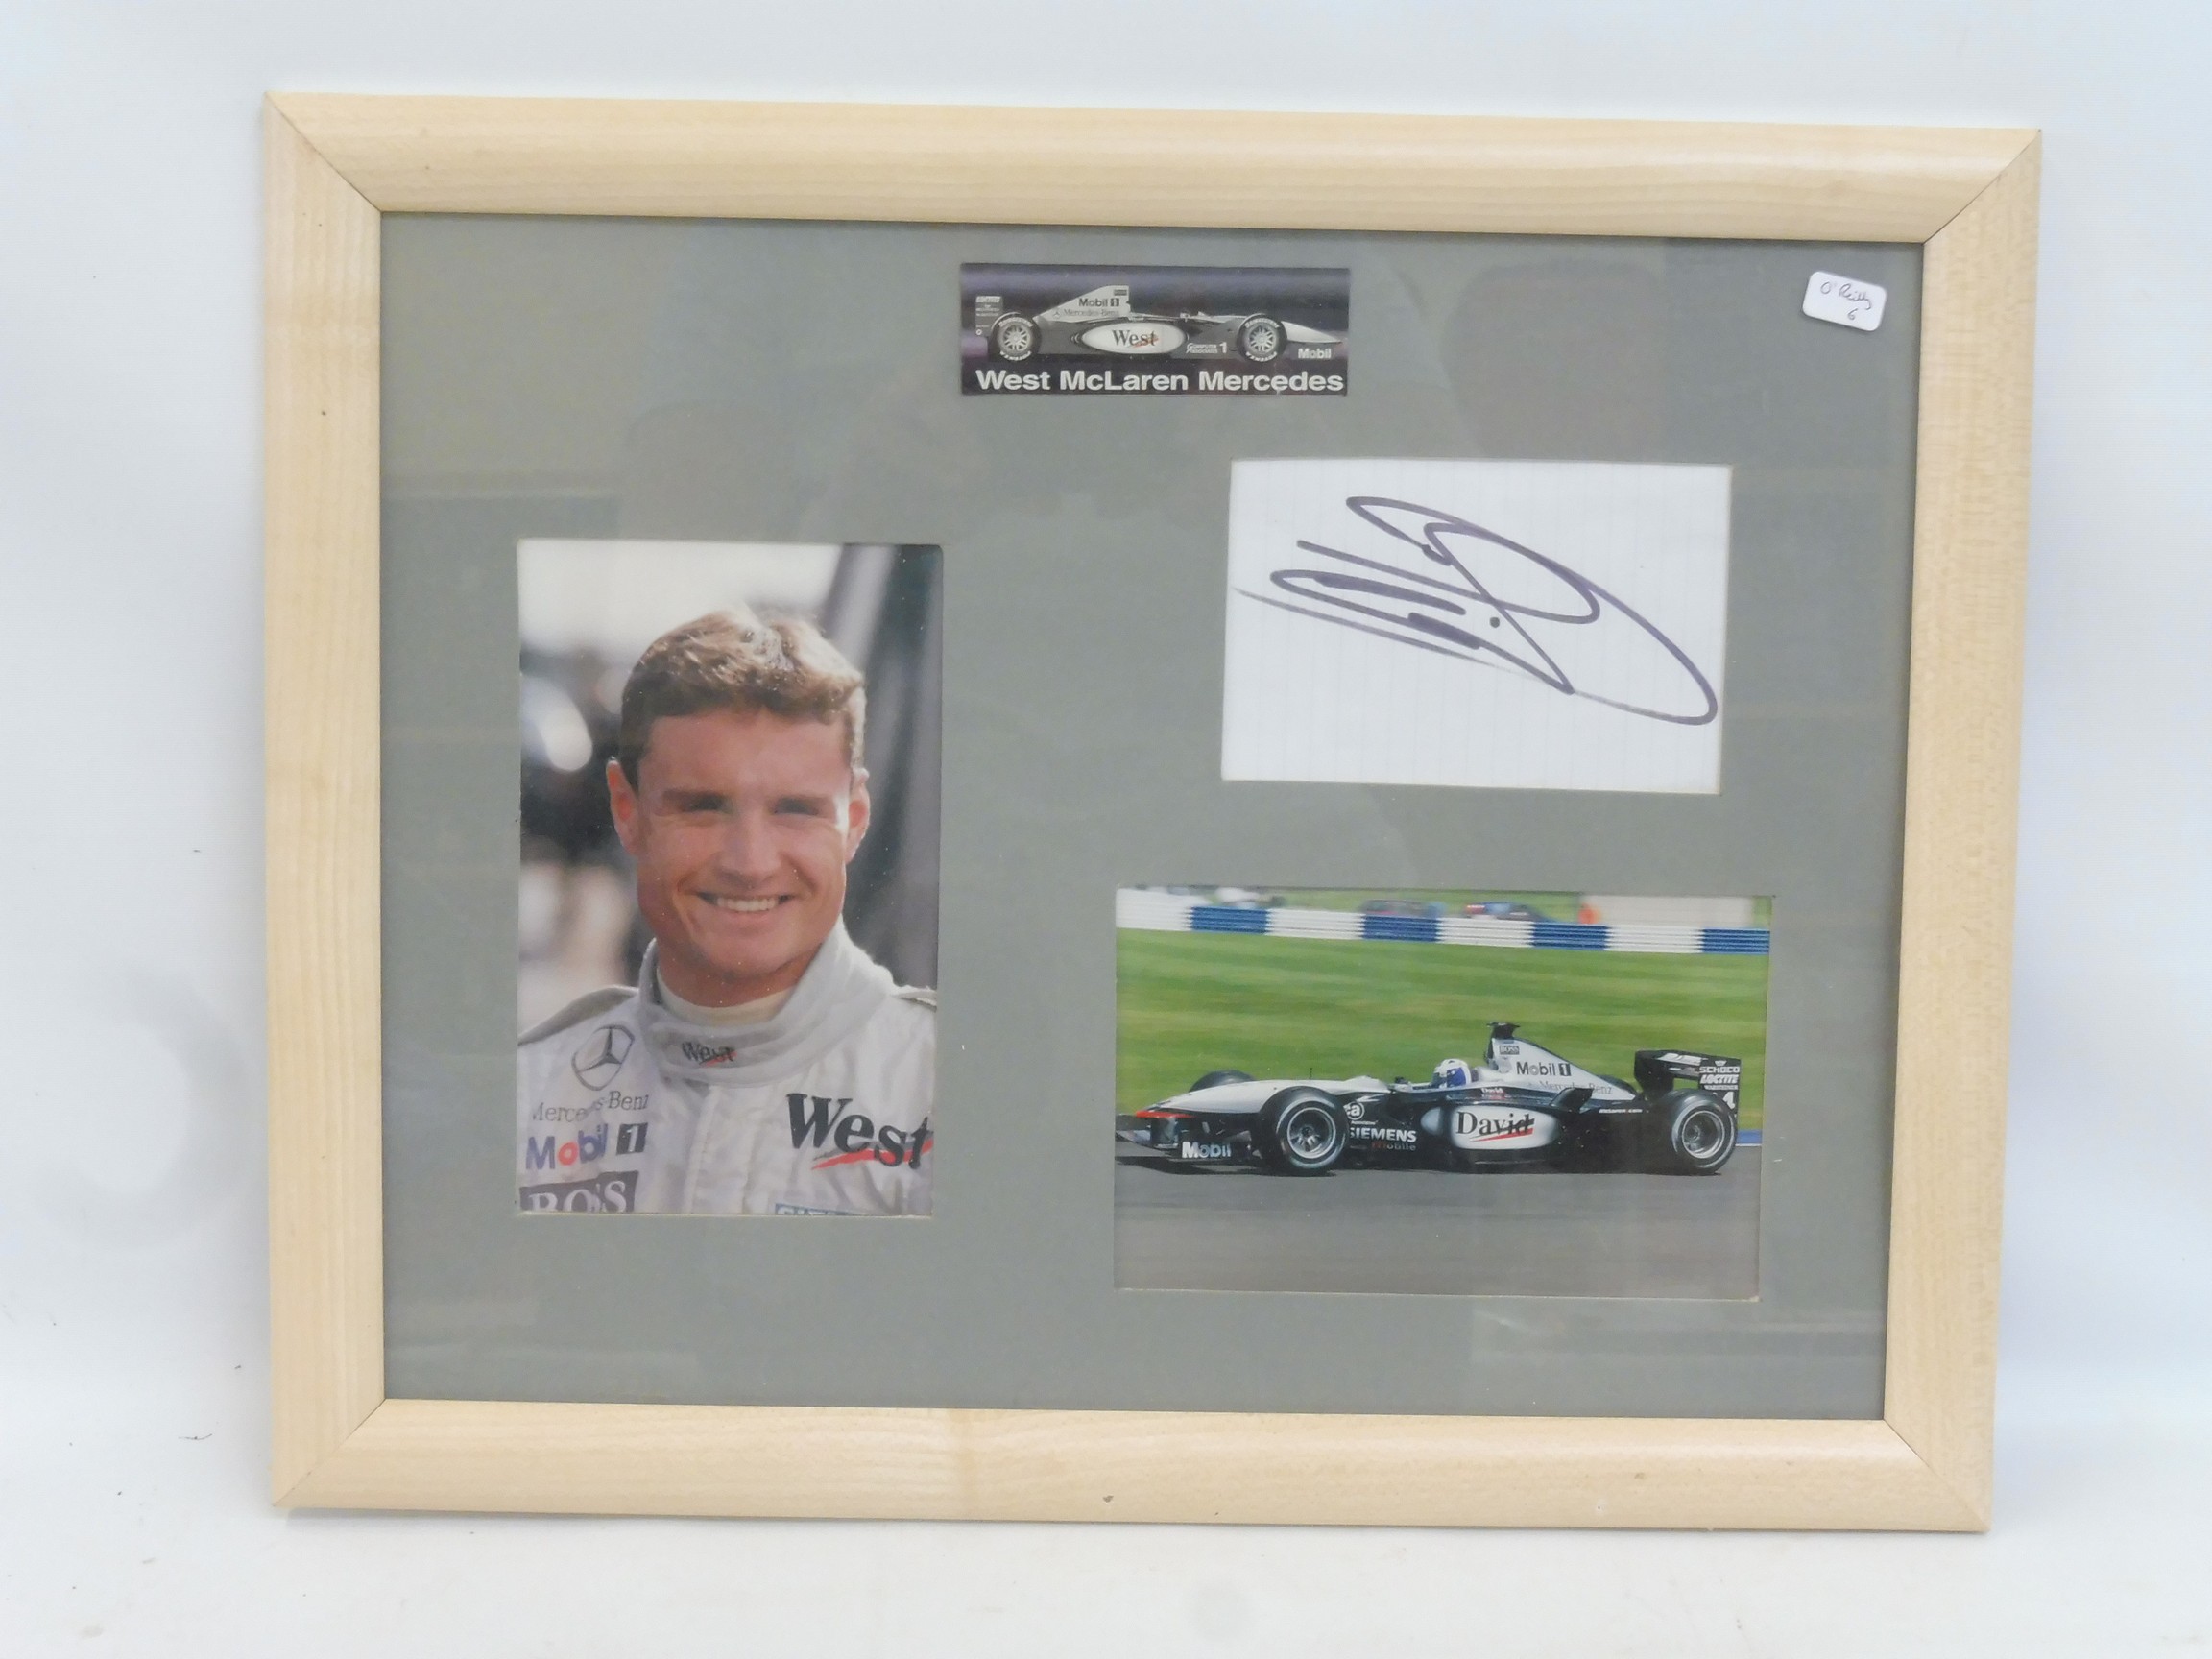 A framed David Coulthard/McLaren Mercedes autograph and photograph presentation, 15 3/4 x 12 3/4".